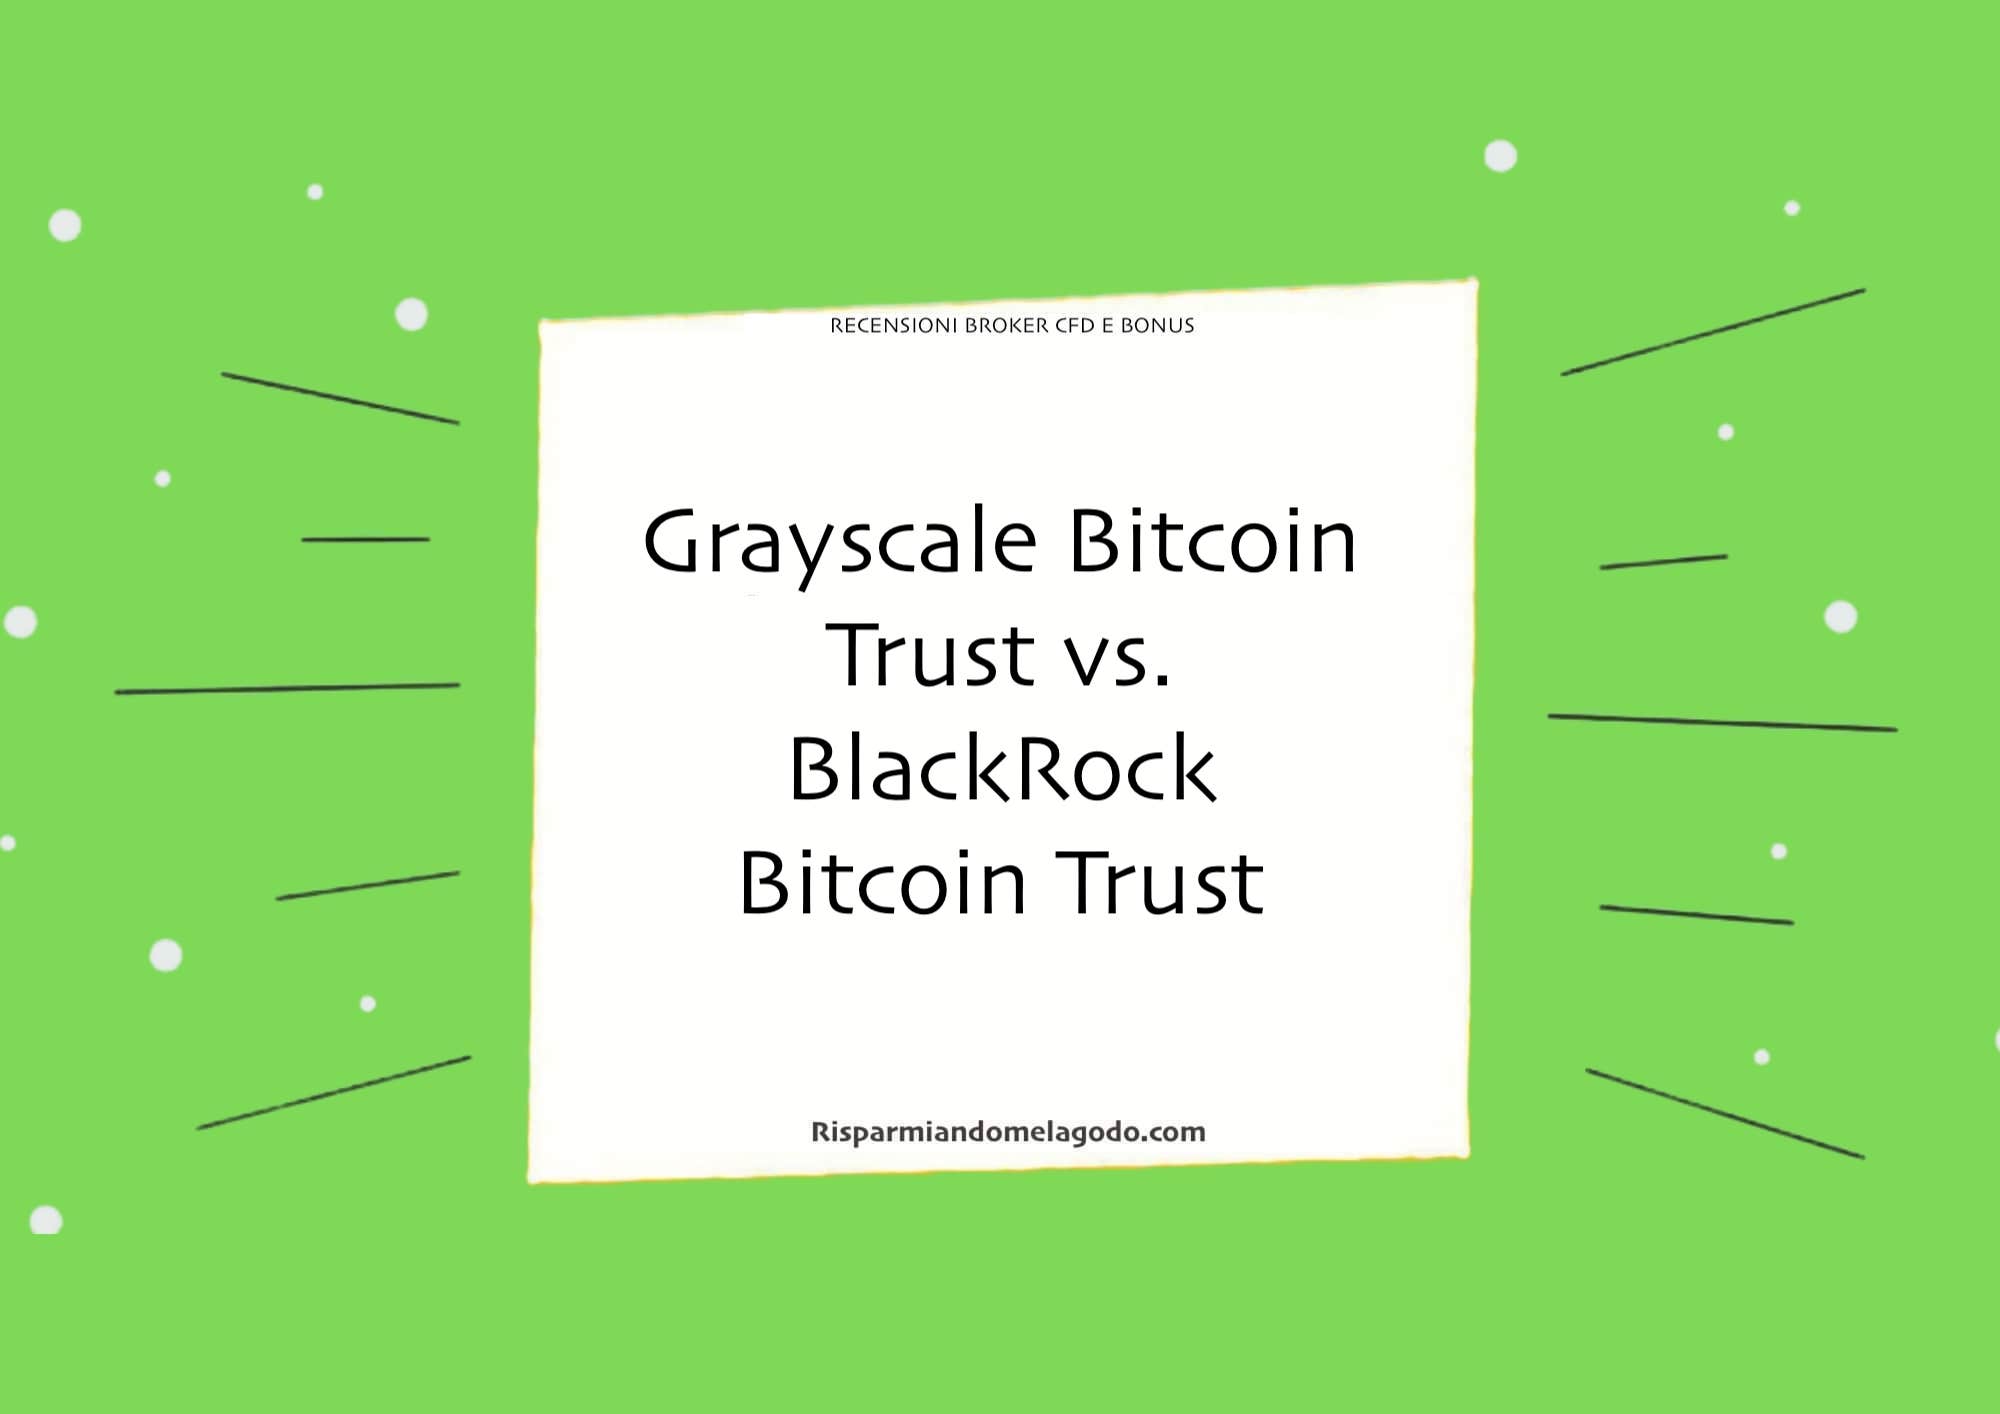 Grayscale Bitcoin Trust vs. BlackRock Bitcoin Trust